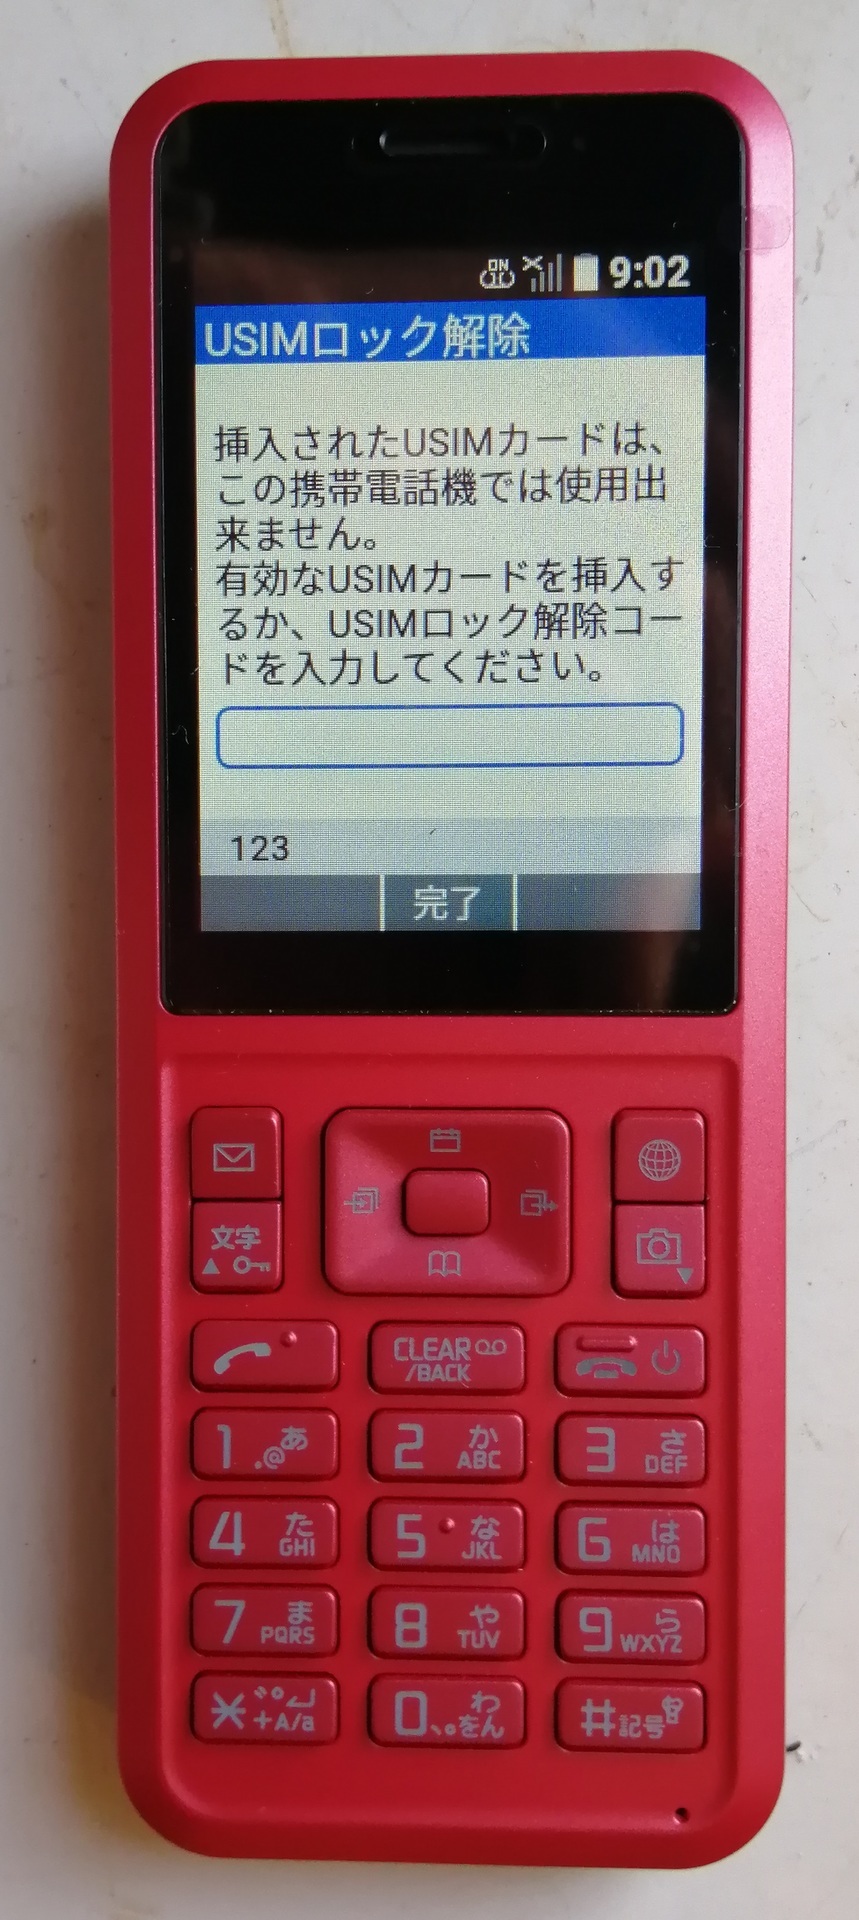 Softbankのプリペイド携帯 シンプルスタイル 月額基本料金0円が凄すぎる Ken